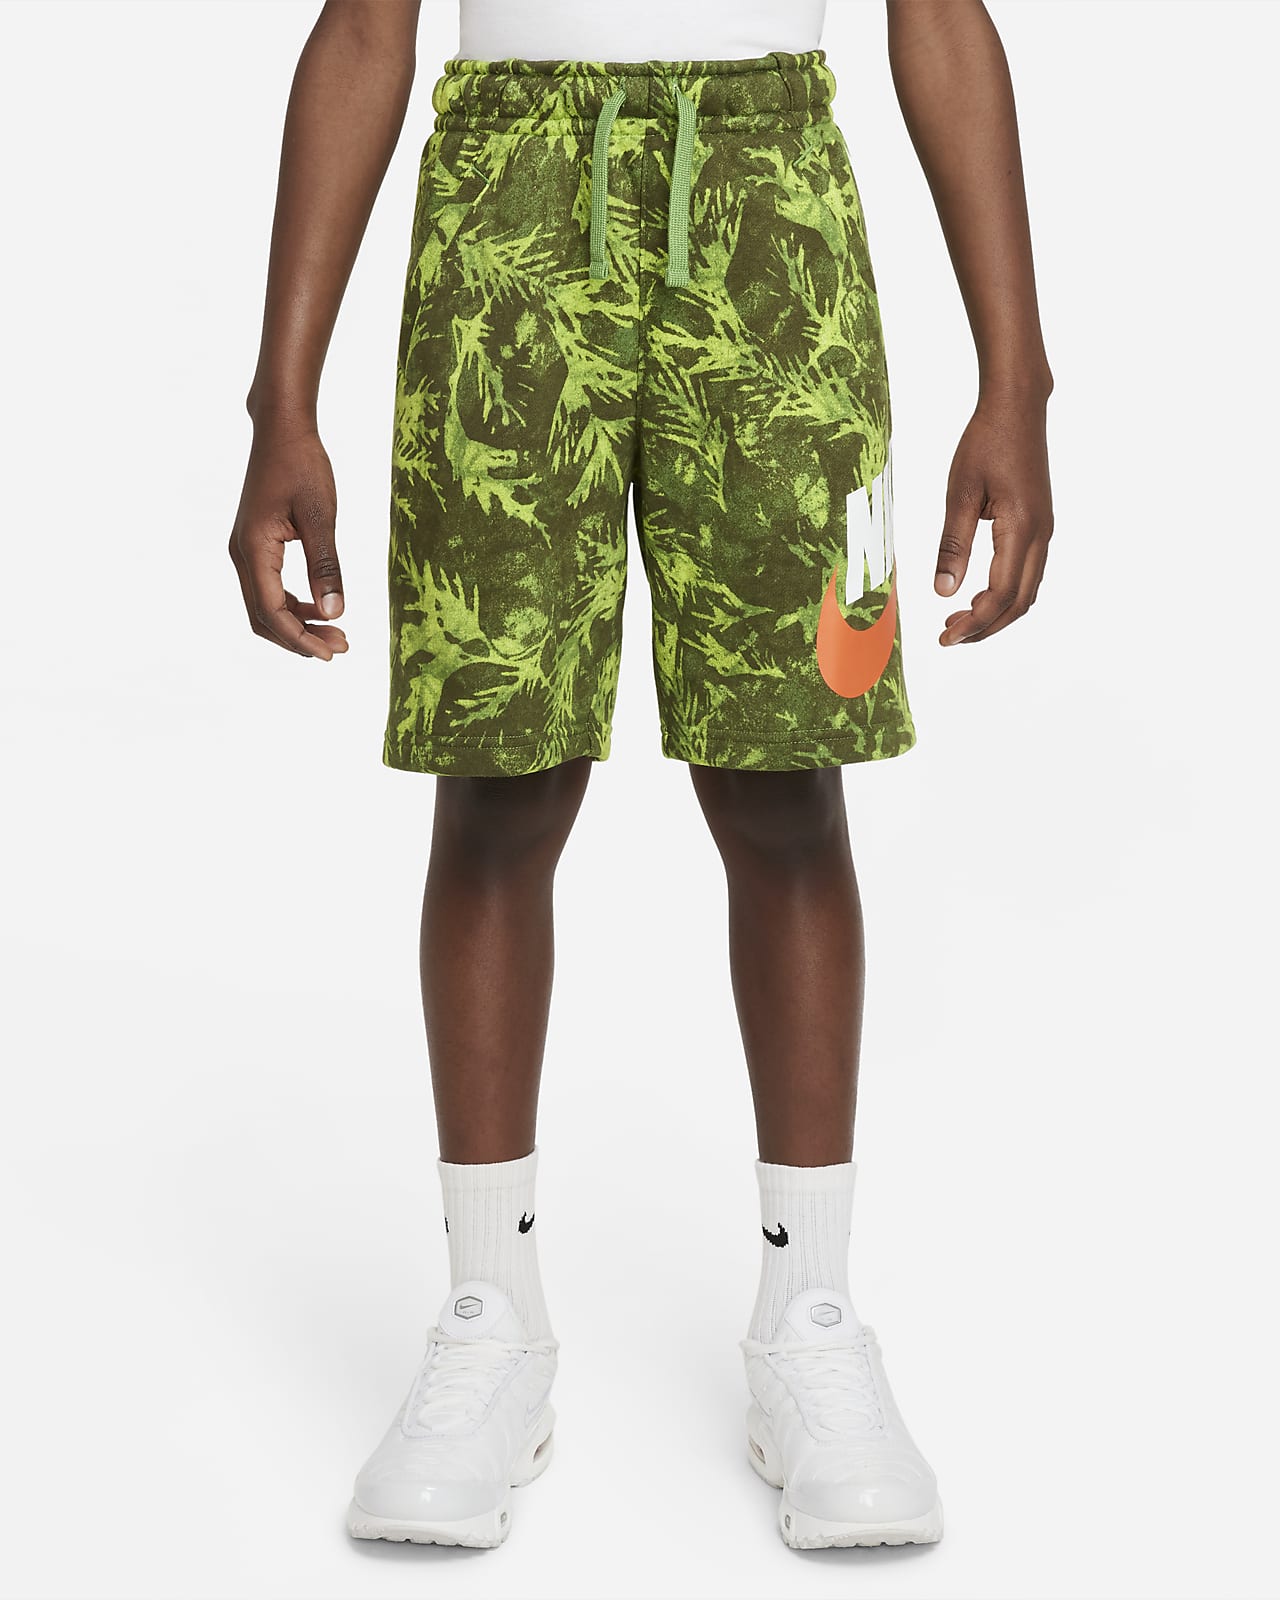 Nike Sportswear Big Kids' (Boys') Printed French Terry Shorts